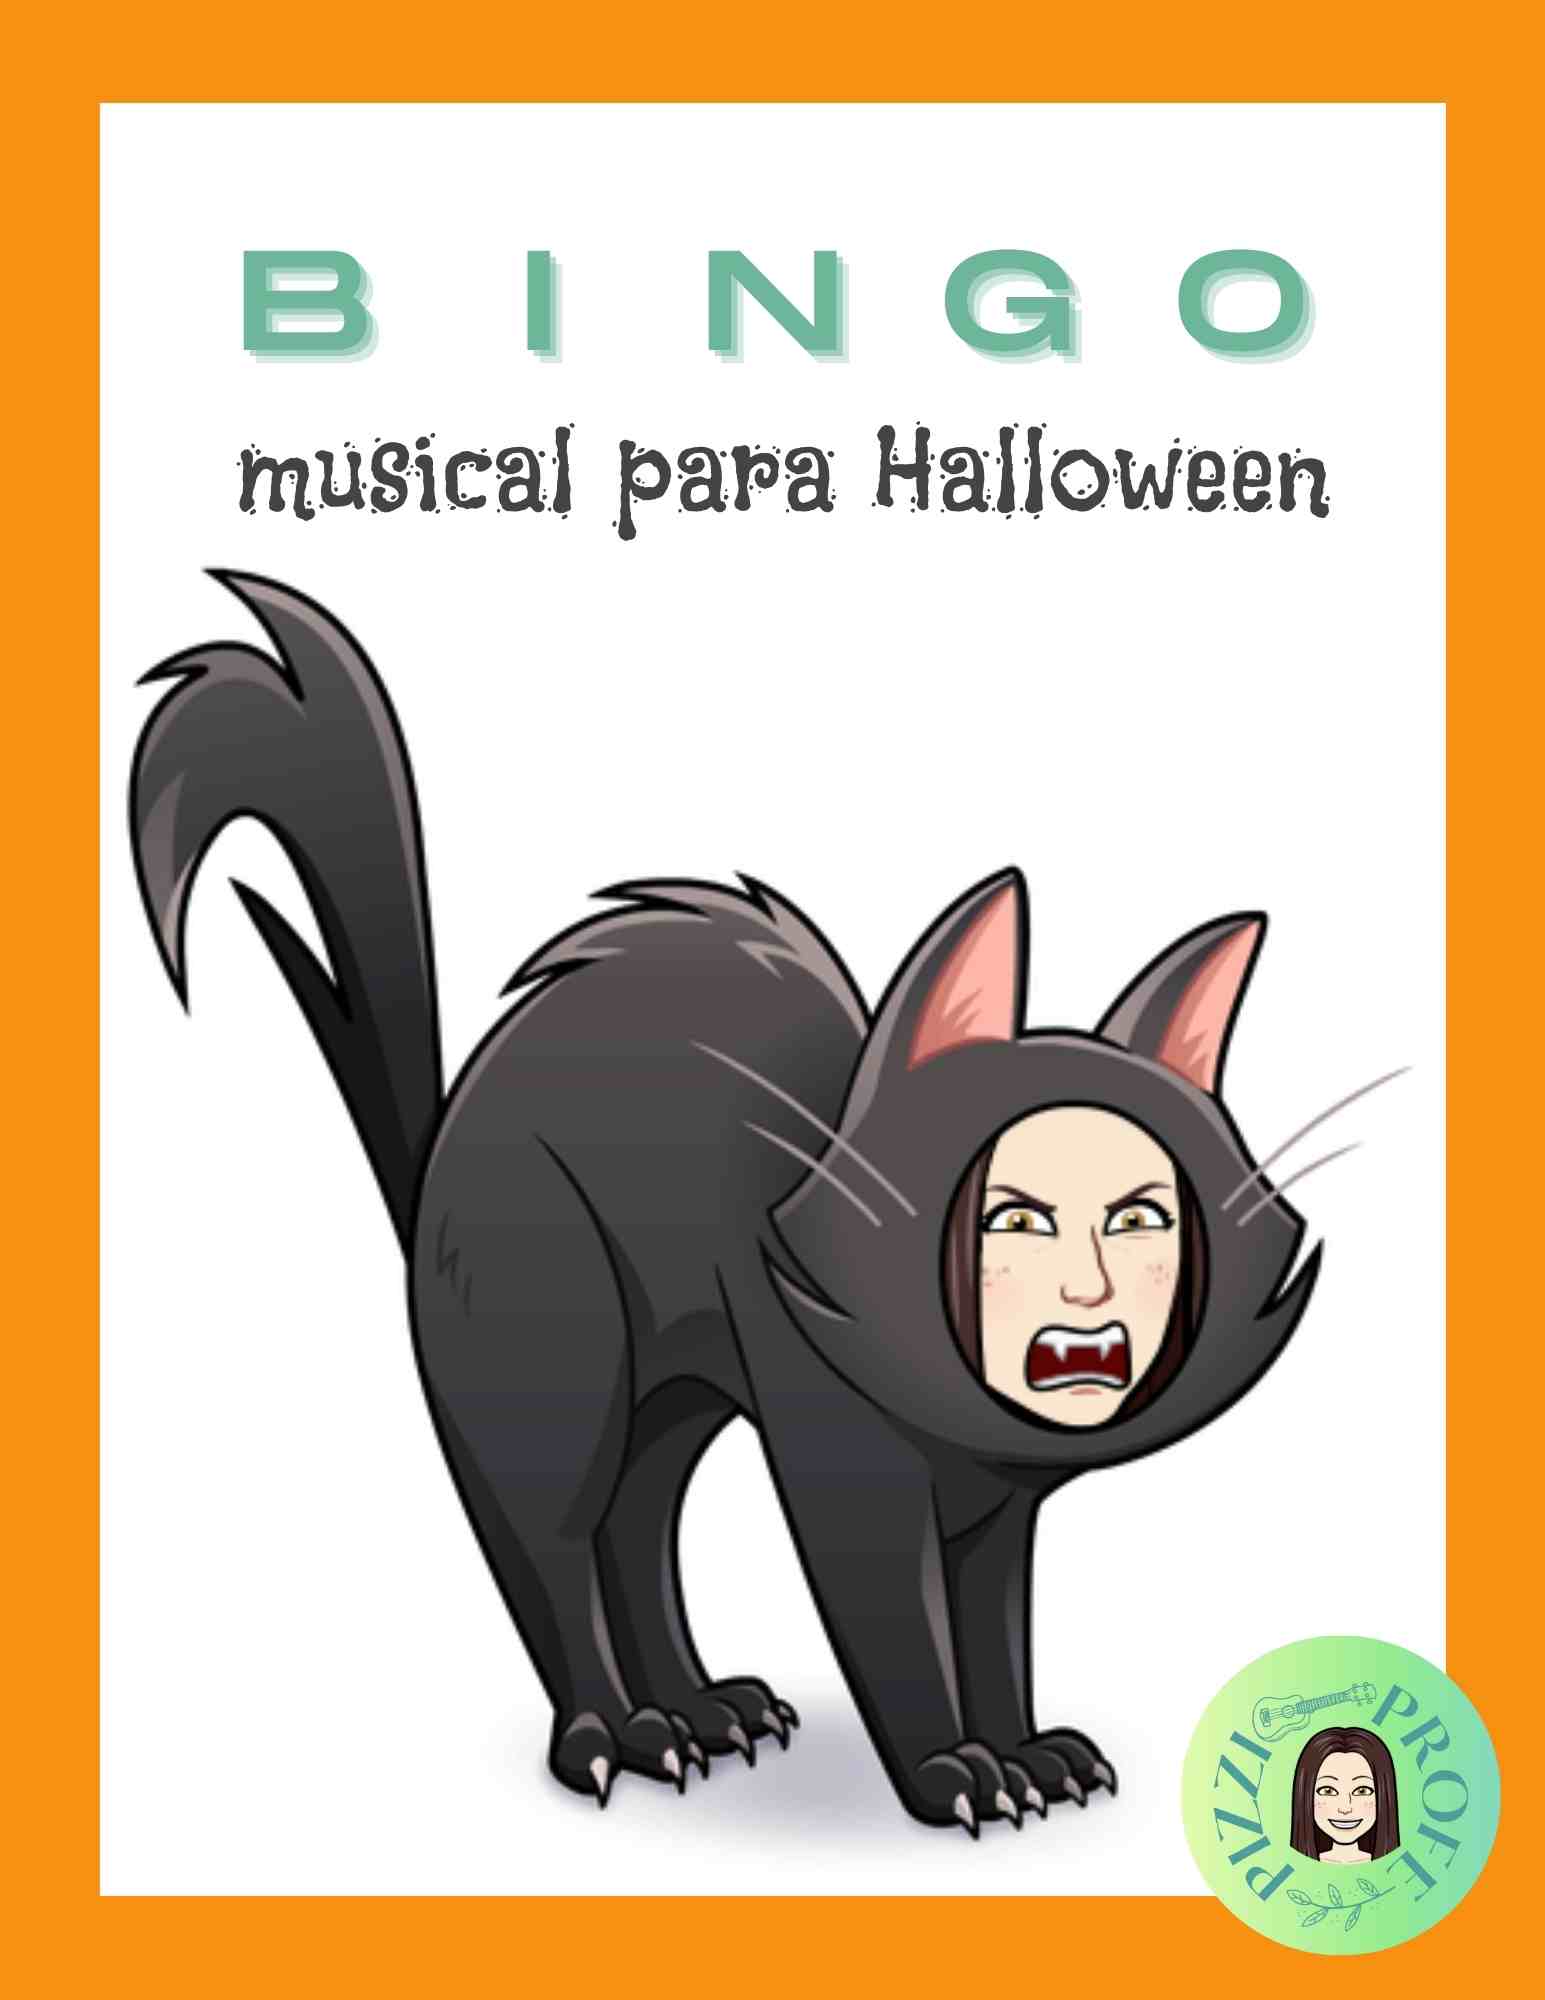 Bingo musical para Halloween by @pizziprofe